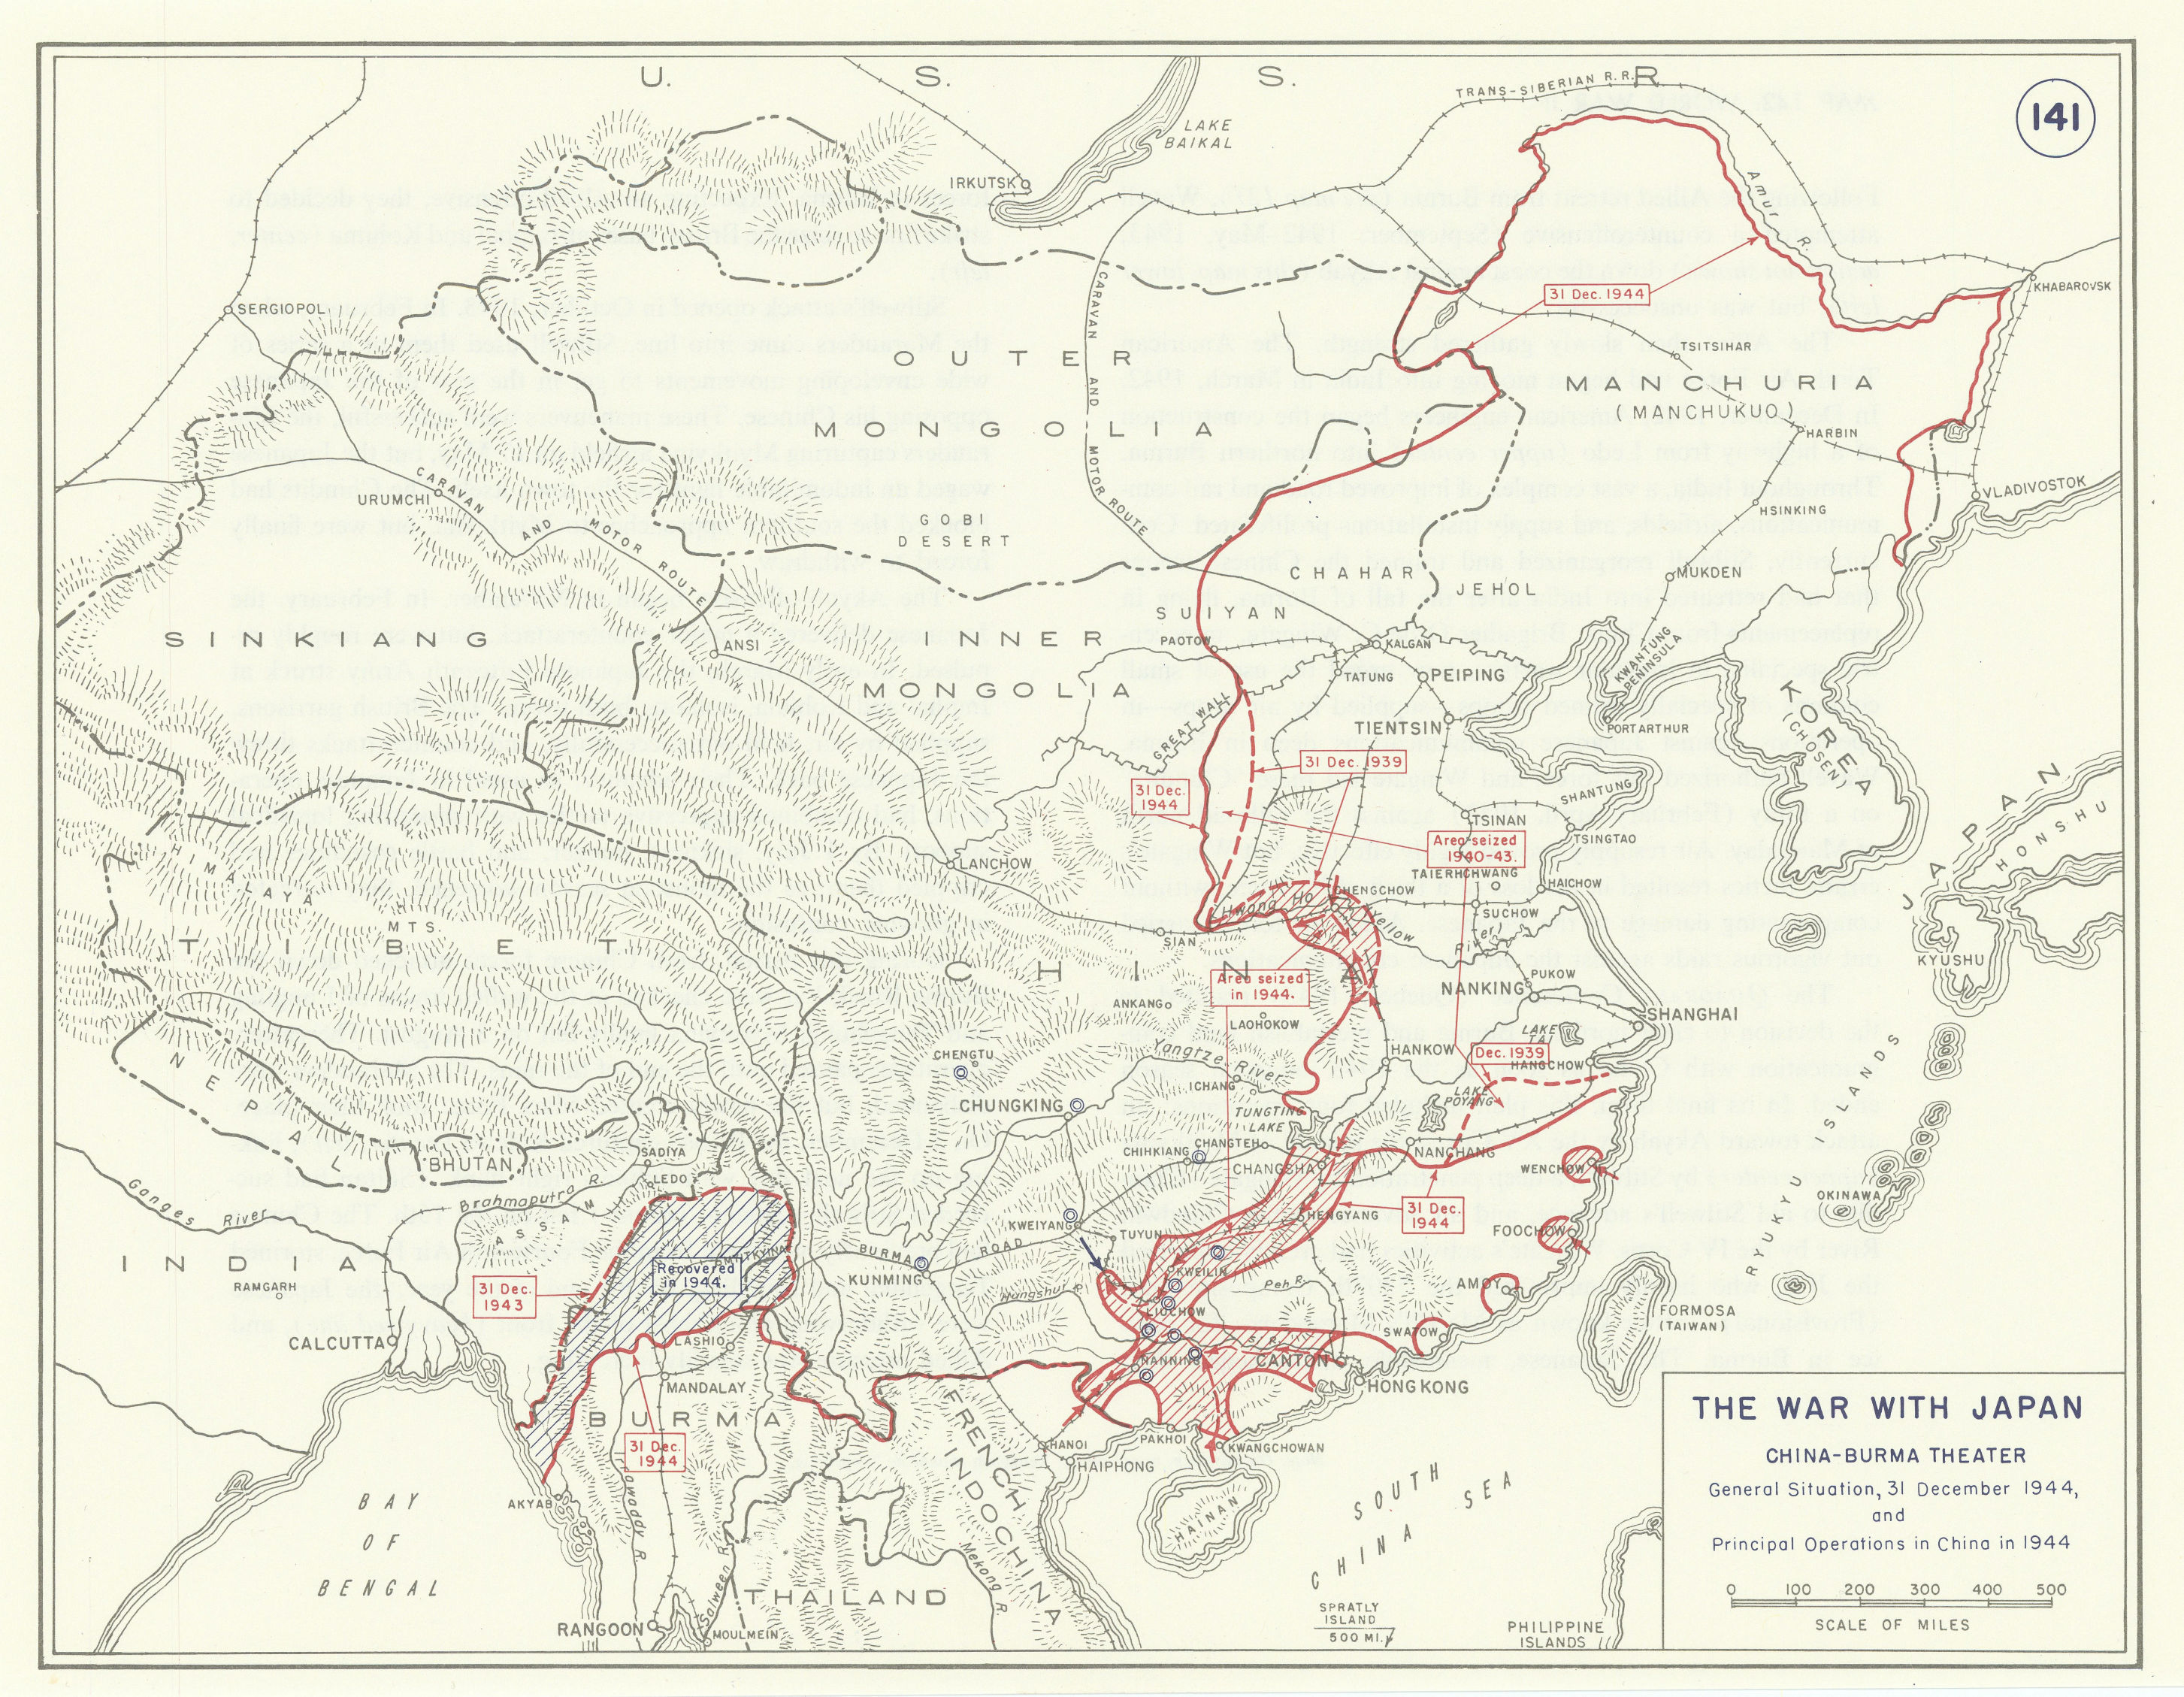 World War 2. China-Burma Theater. 1944 Principal Operations in China 1959 map